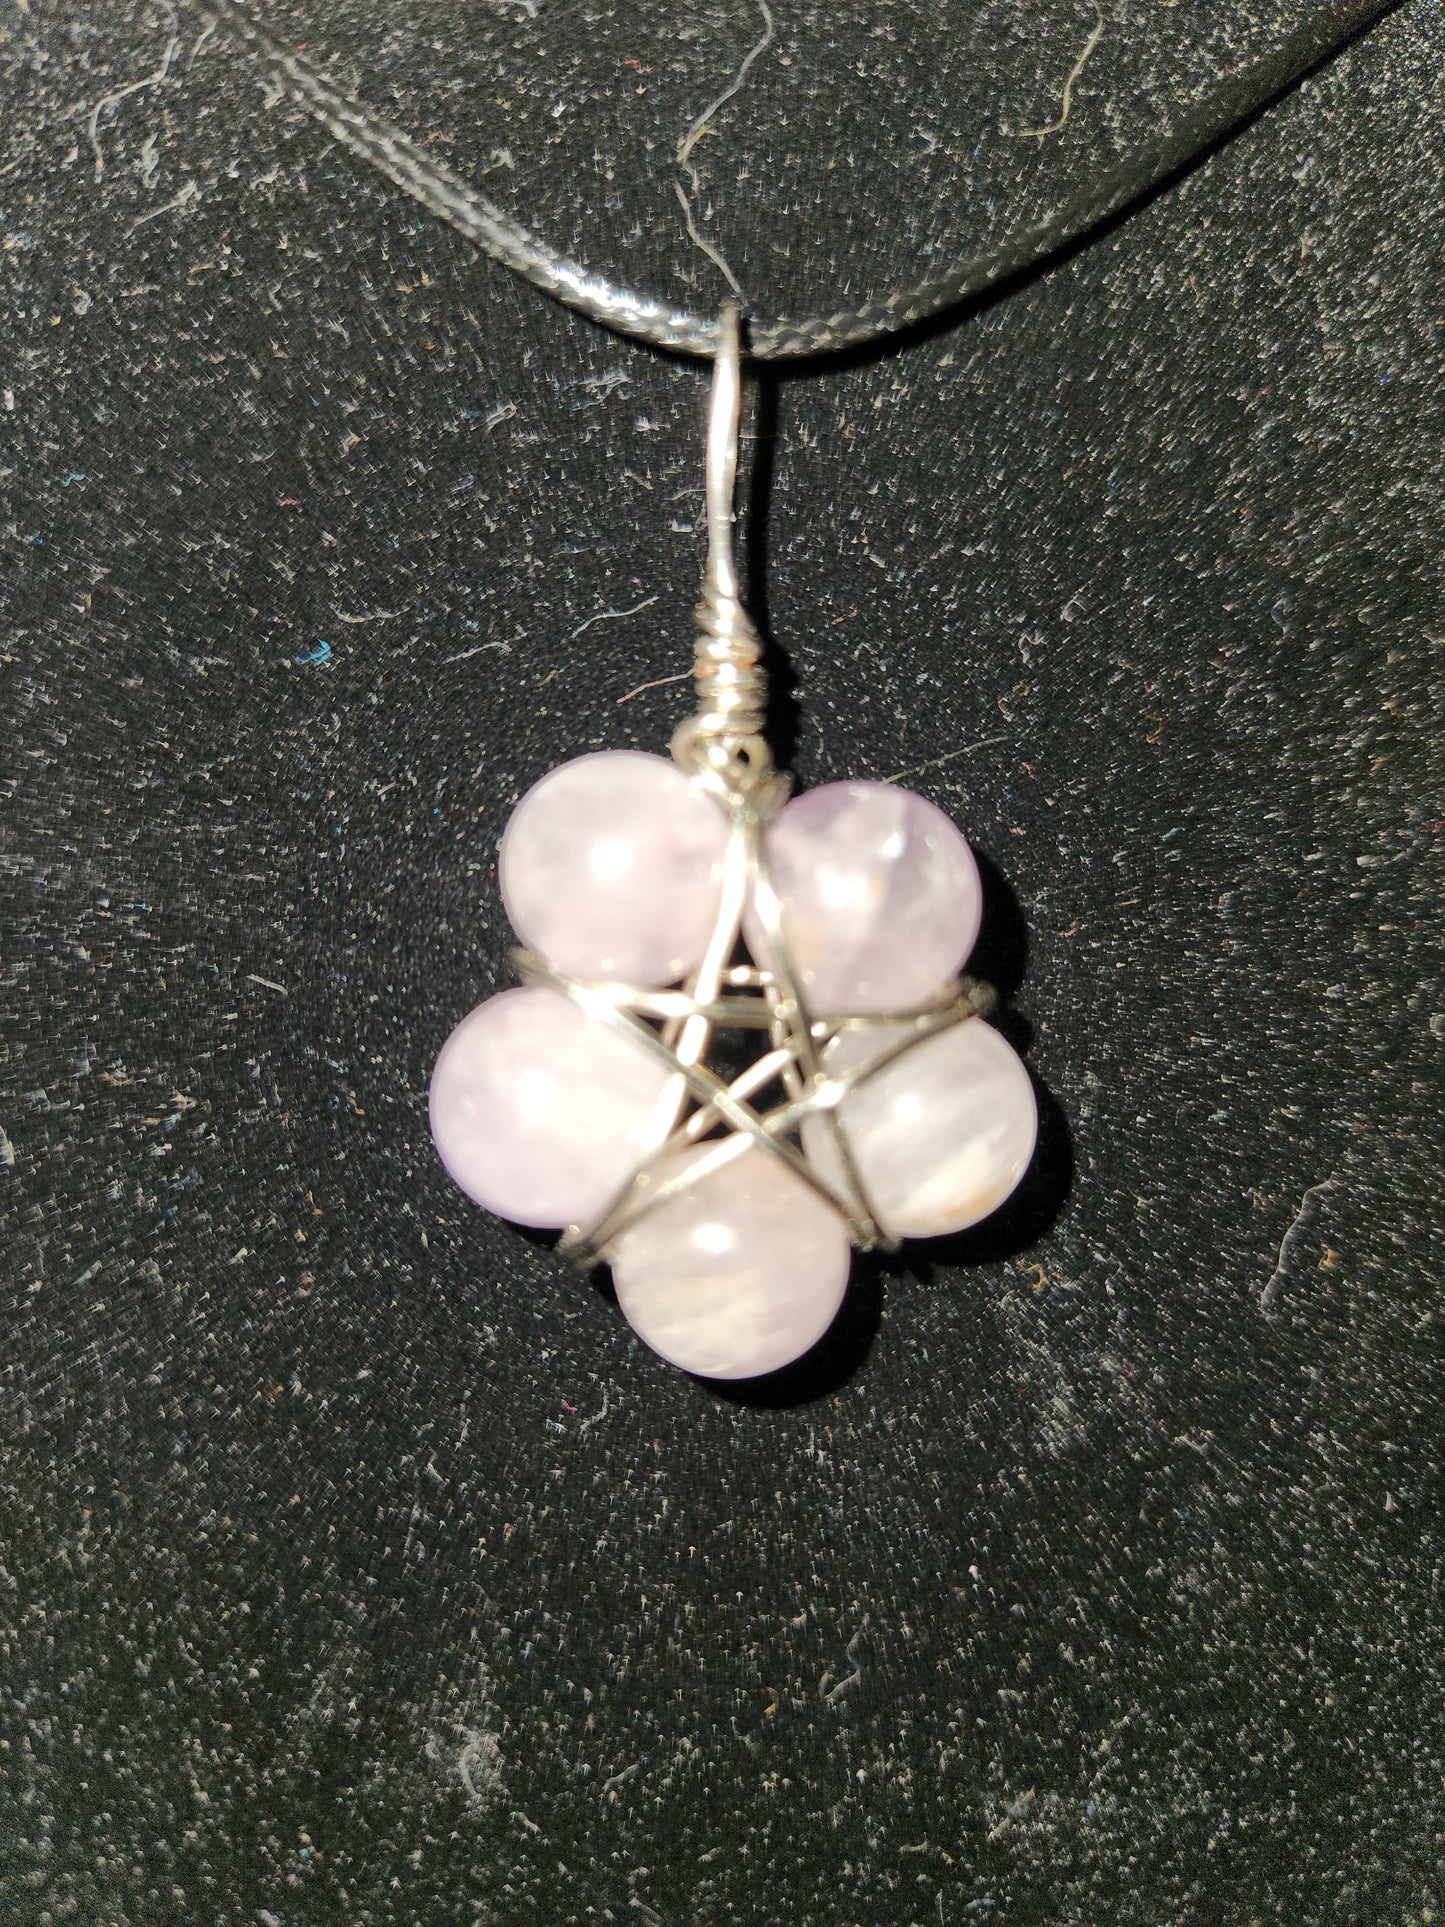 Amethyst pentagram necklace